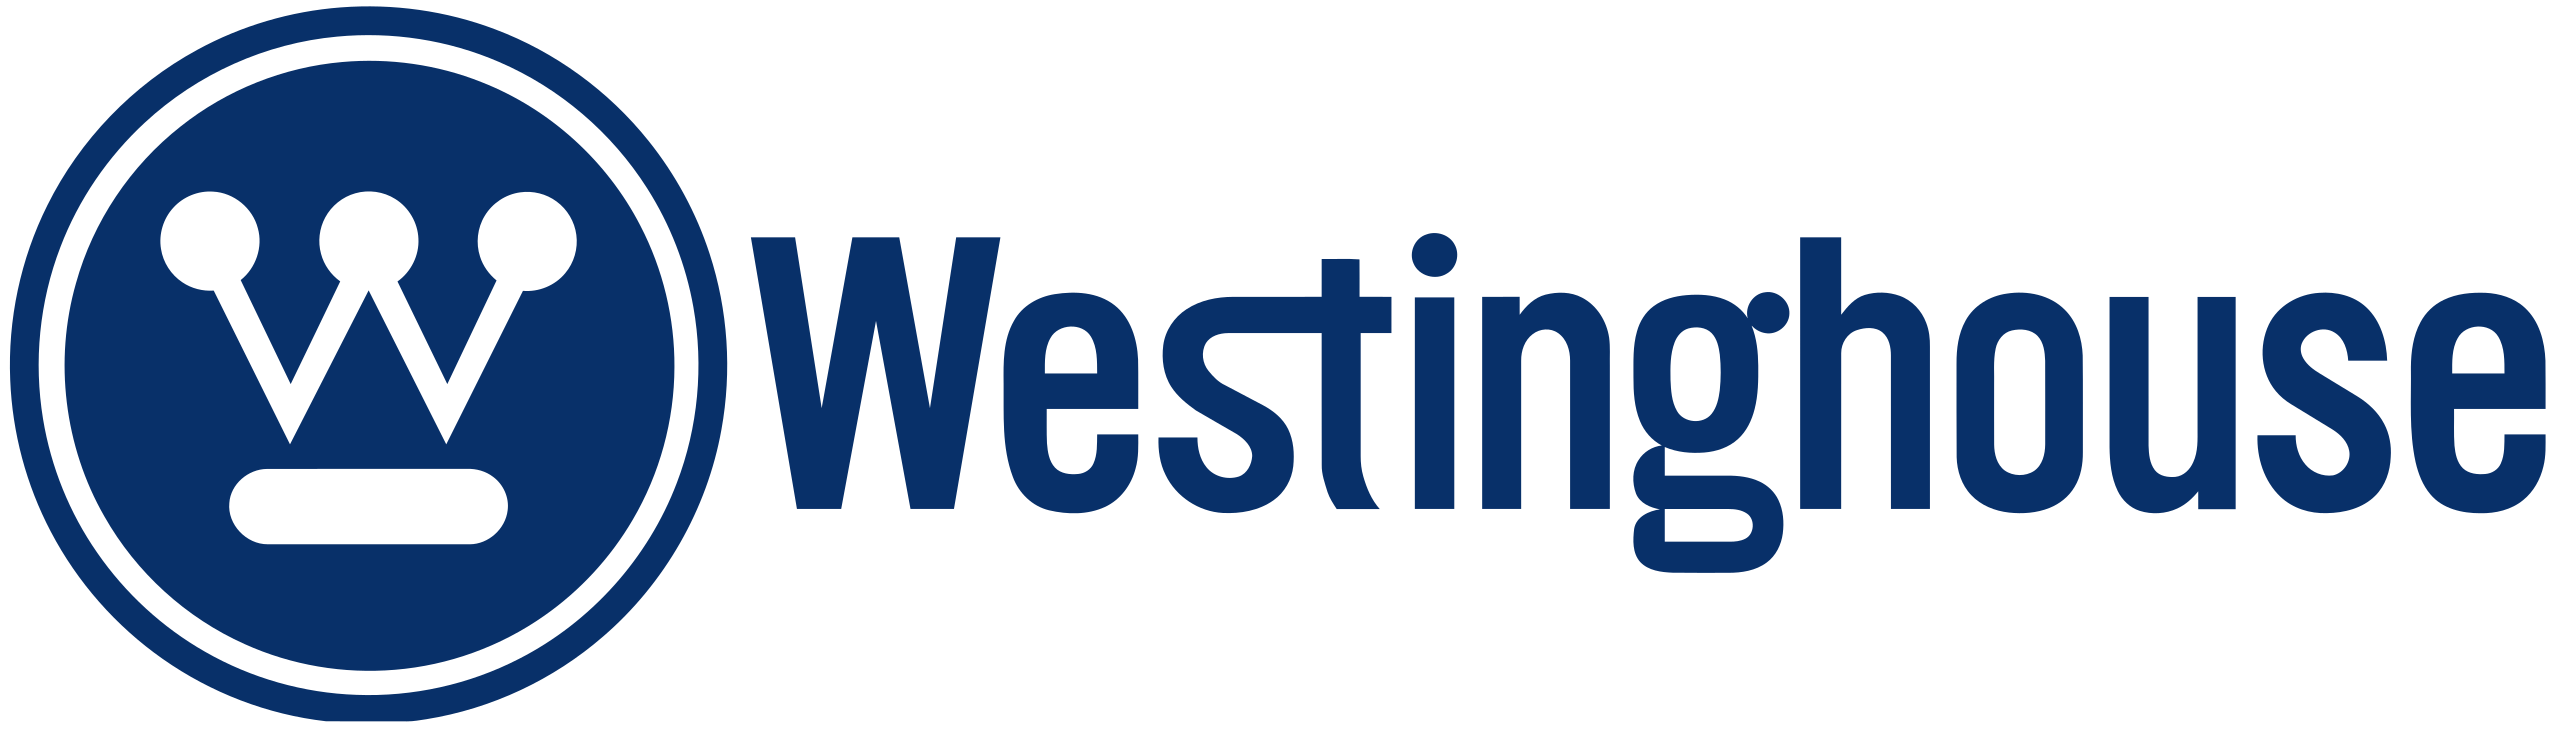 2560px-Westinghouse_logo_and_wordmark.svg